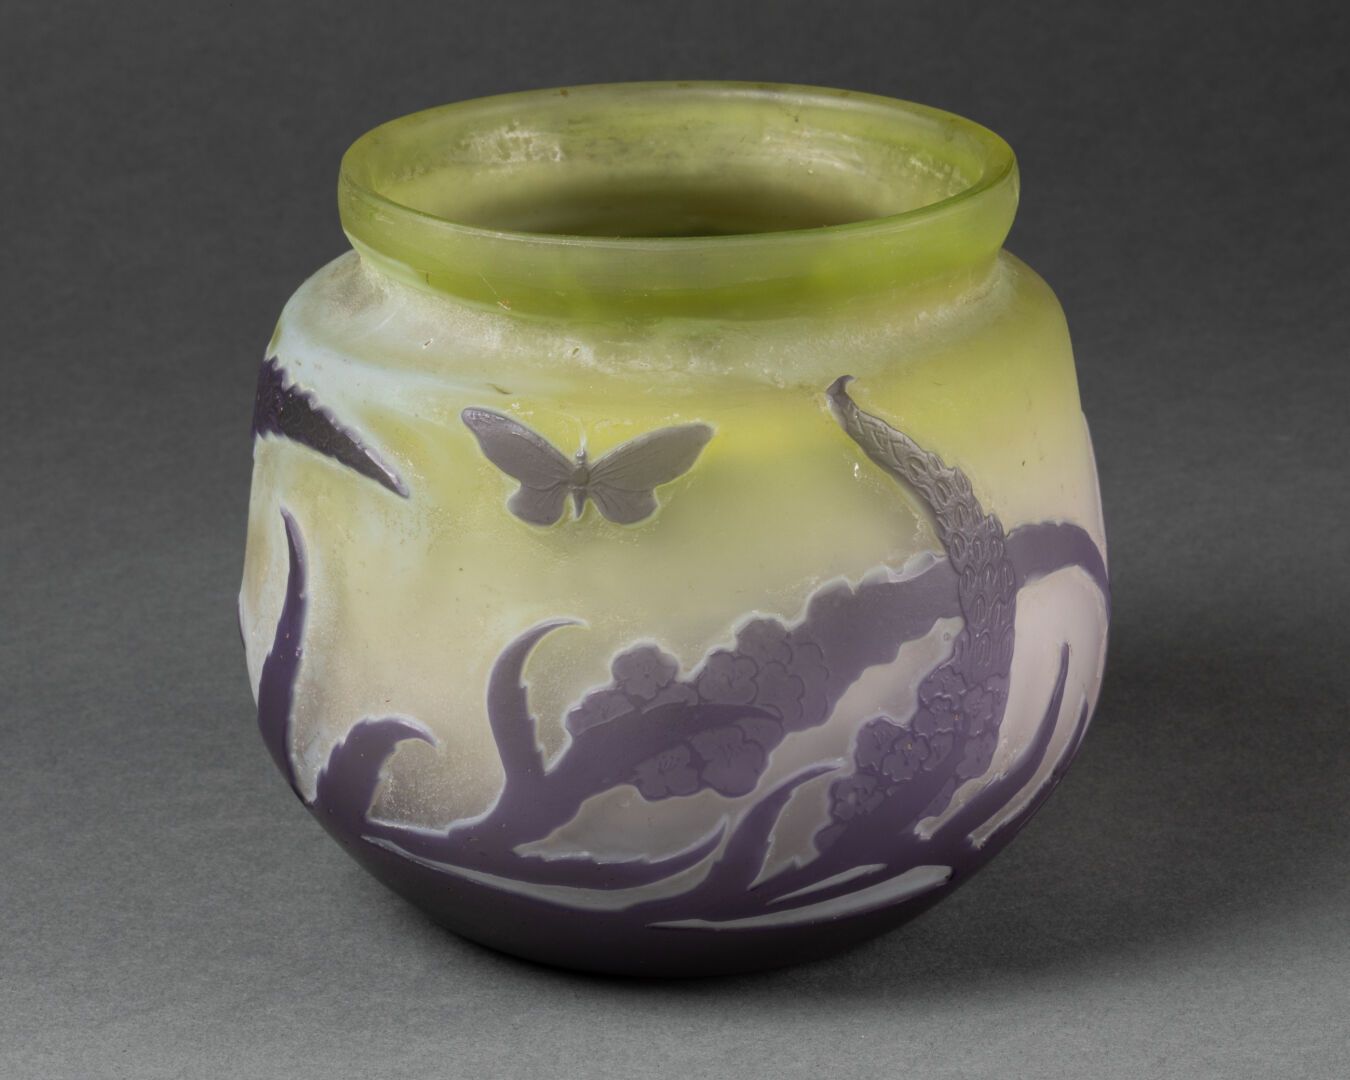 Établissements GALLÉ (1904-1936) 狭长的颈部和略微扁平的瓶身的花瓶

黄色背景上的紫色羽扇豆和三只蝴蝶的装饰。

酸性蚀刻的多层&hellip;